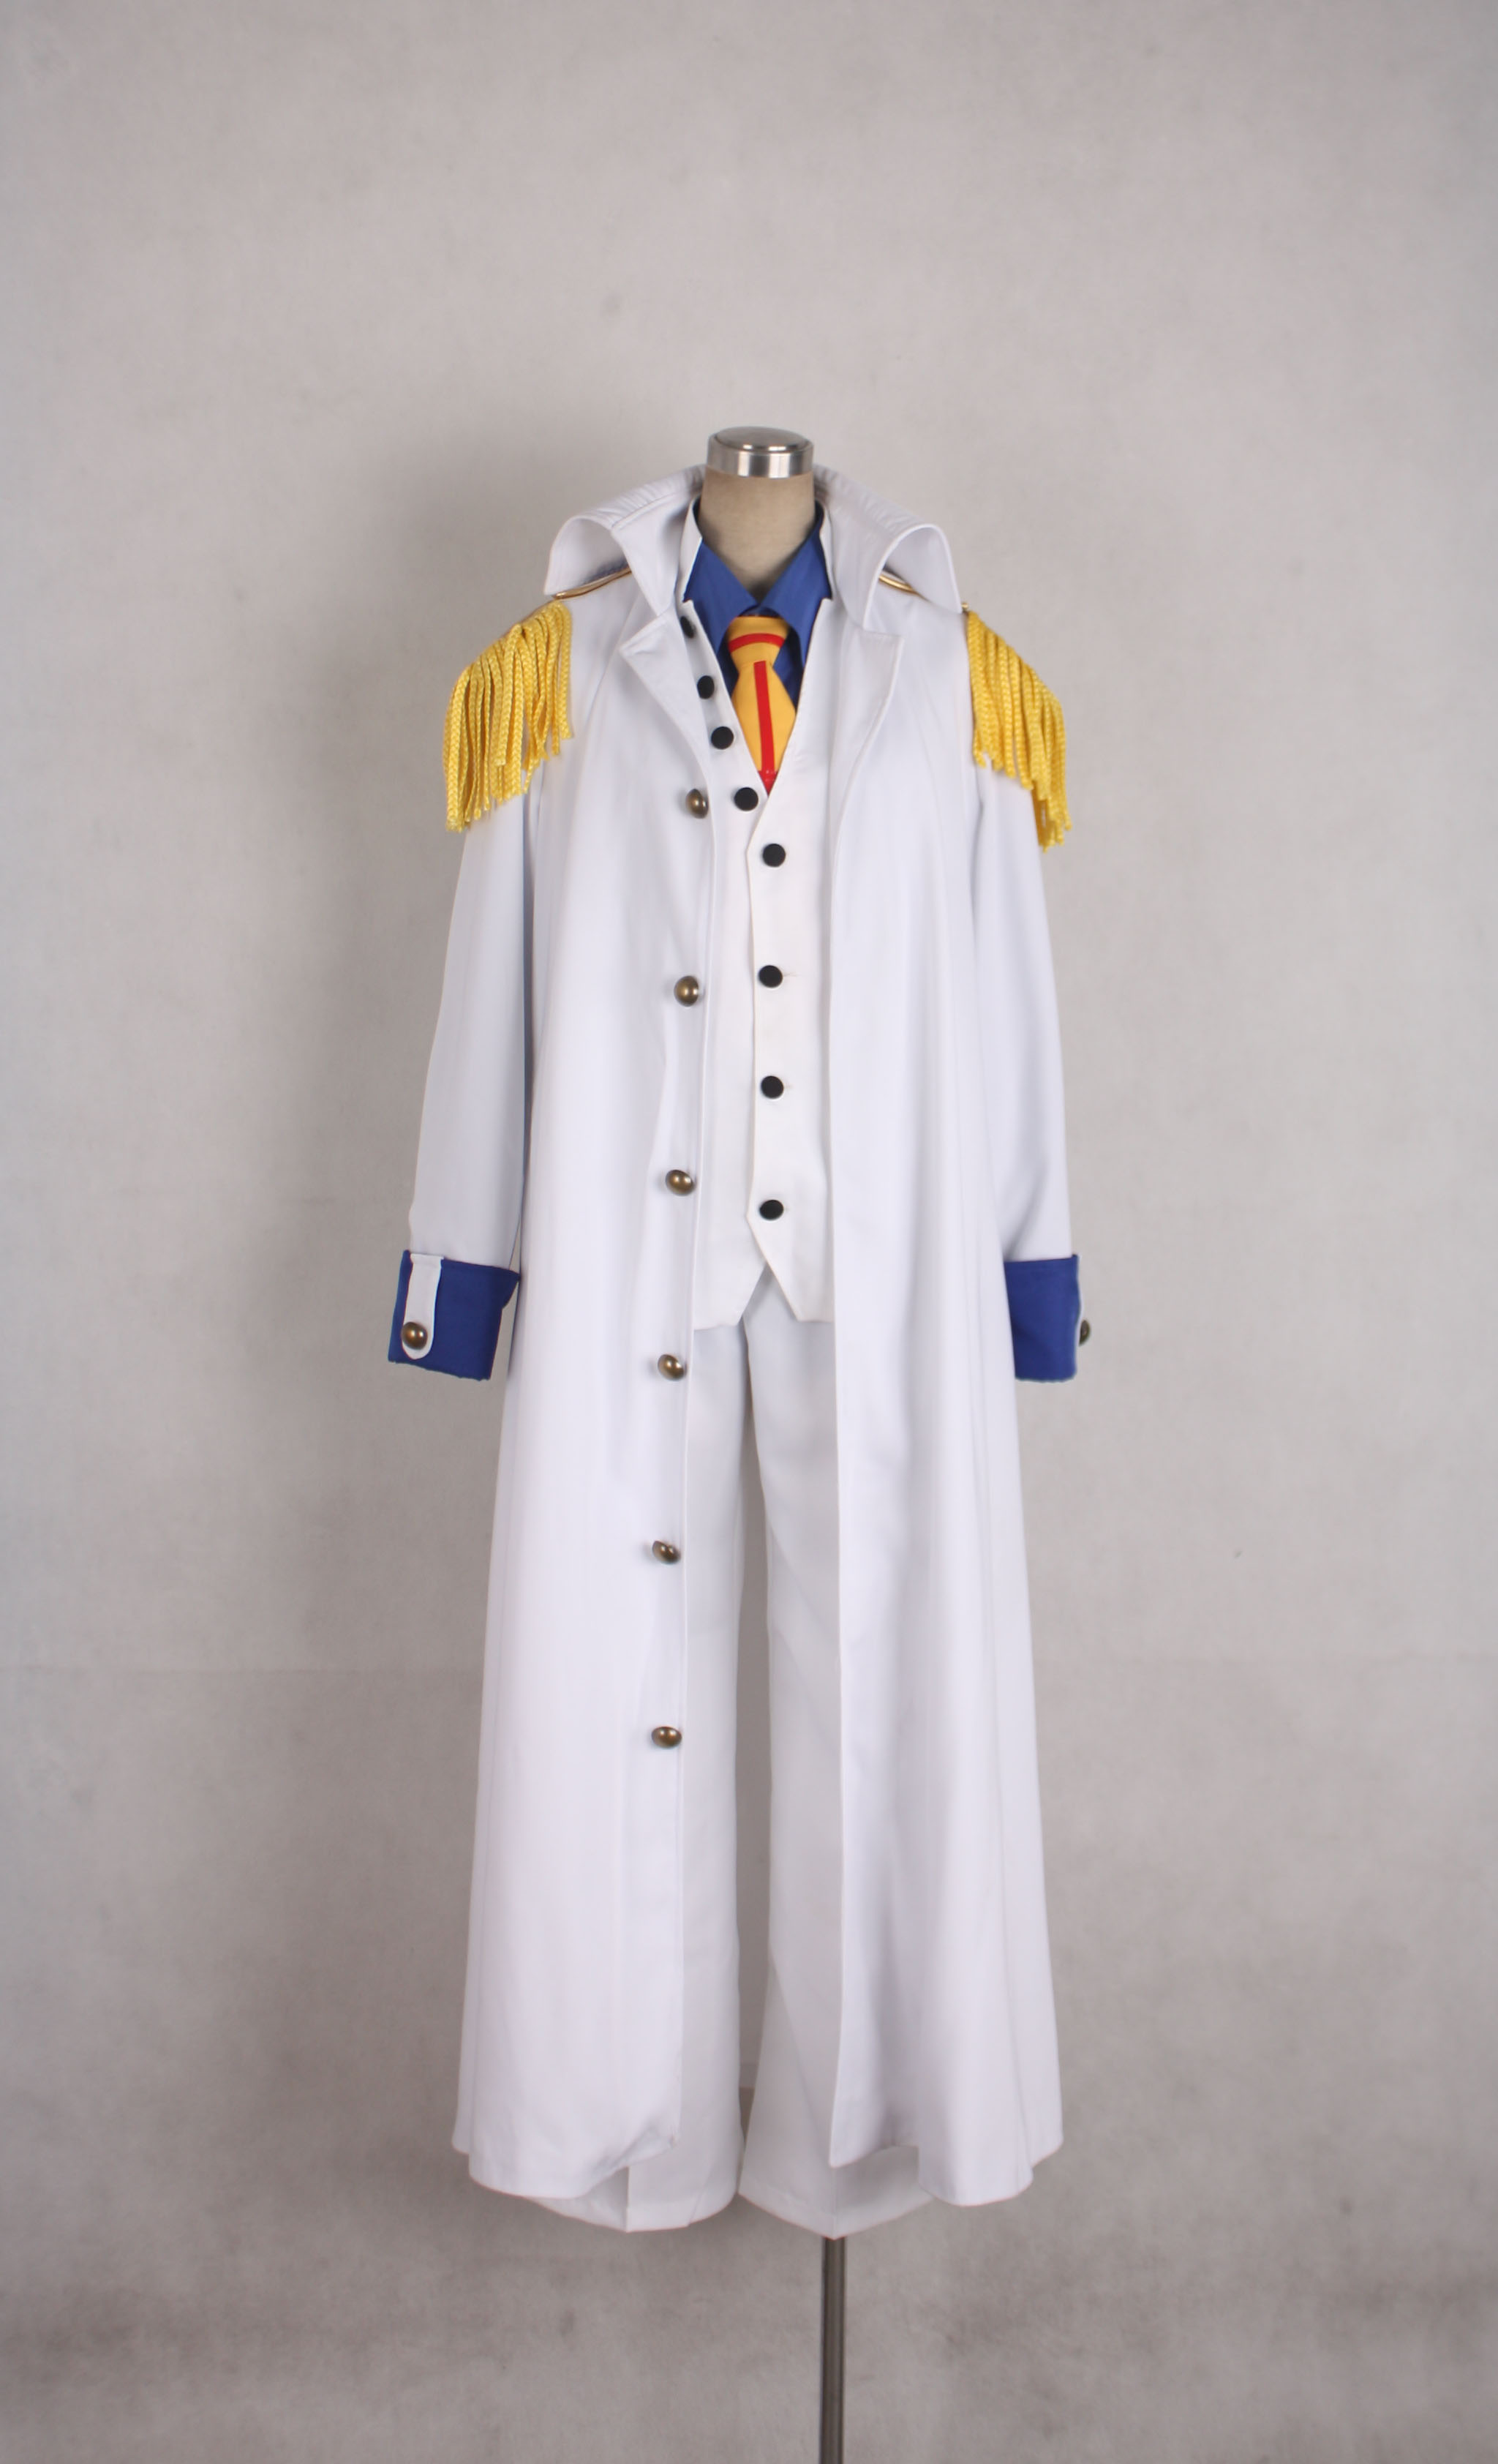 One piece Aokiji Kuzan Navy Admiral Uniform Cosplay Costume.